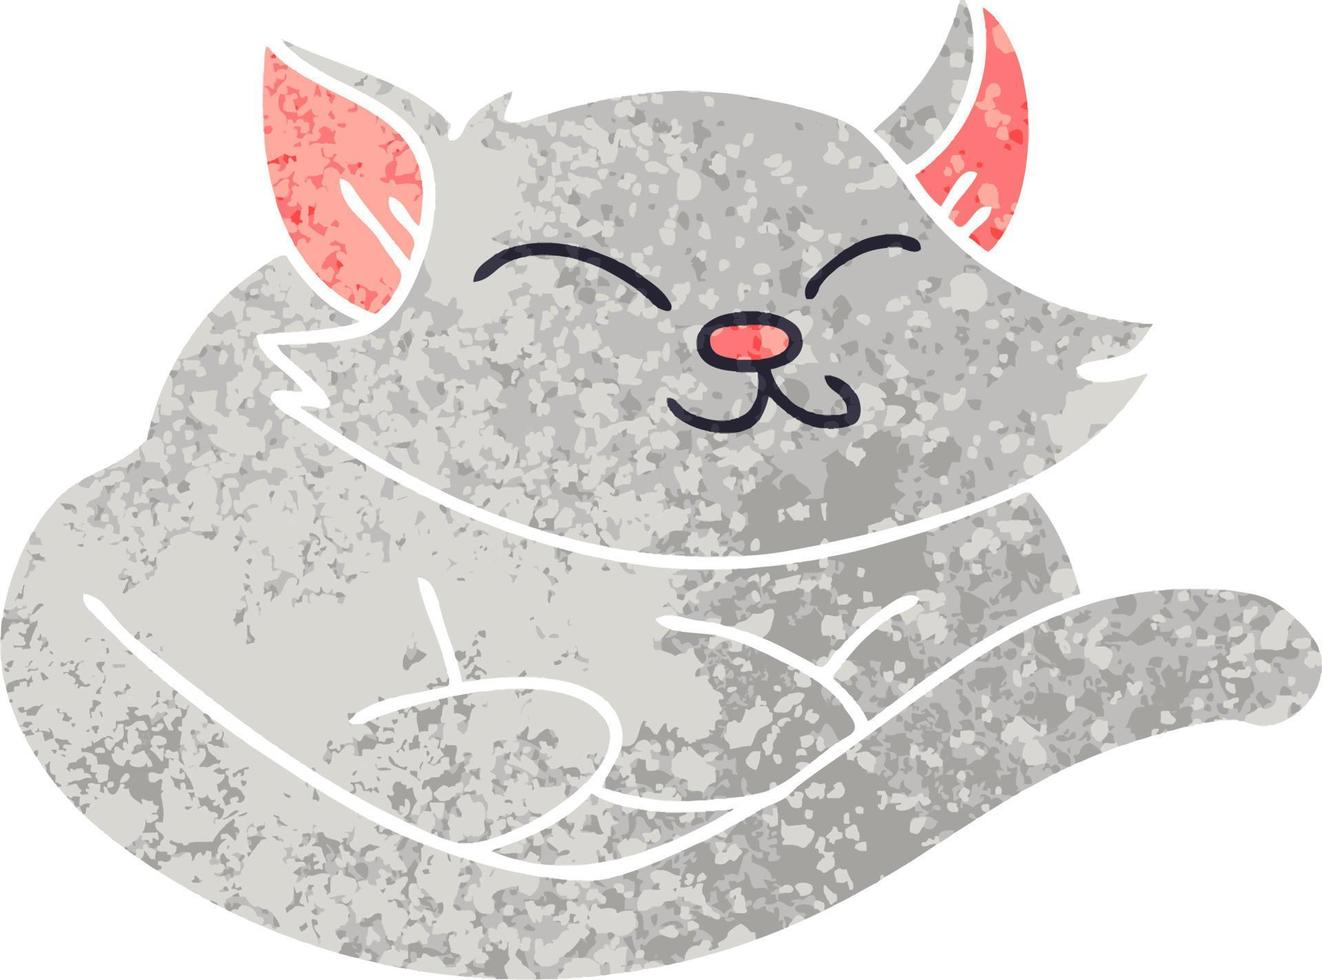 schrullige Cartoon-Katze im Retro-Illustrationsstil vektor